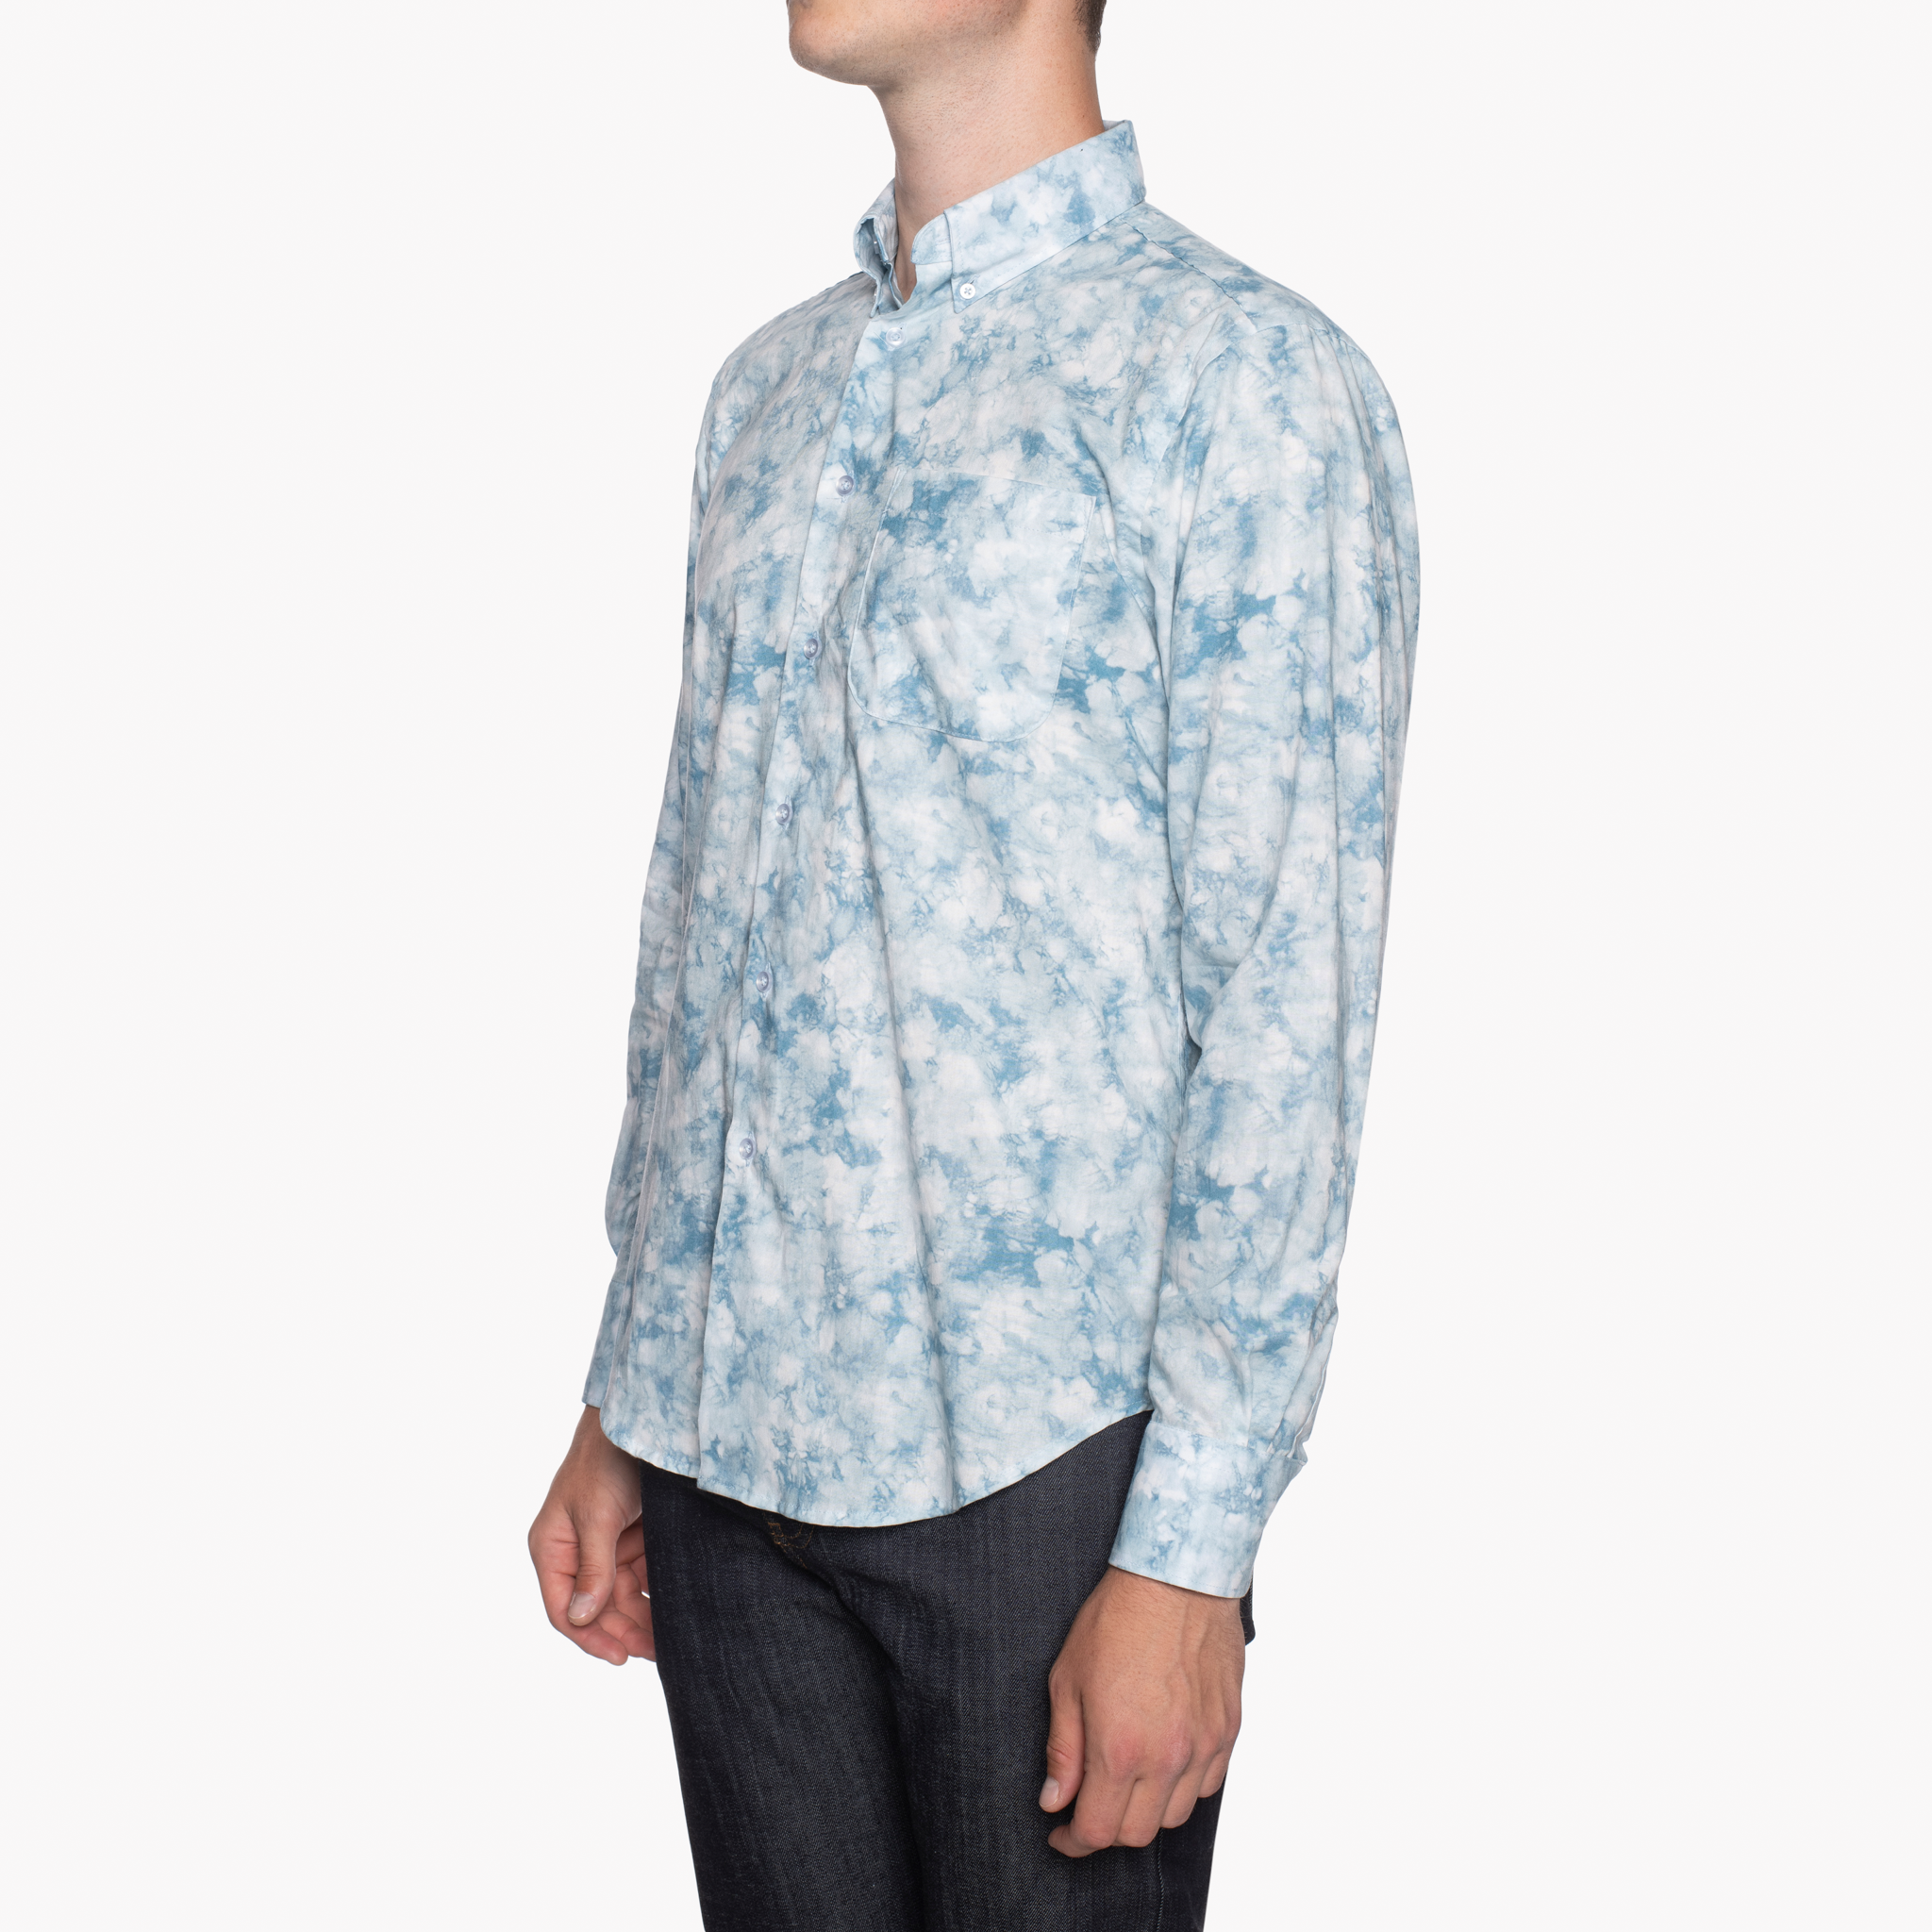  Easy Shirt - Tie Dye Print - Pale Blue -side 